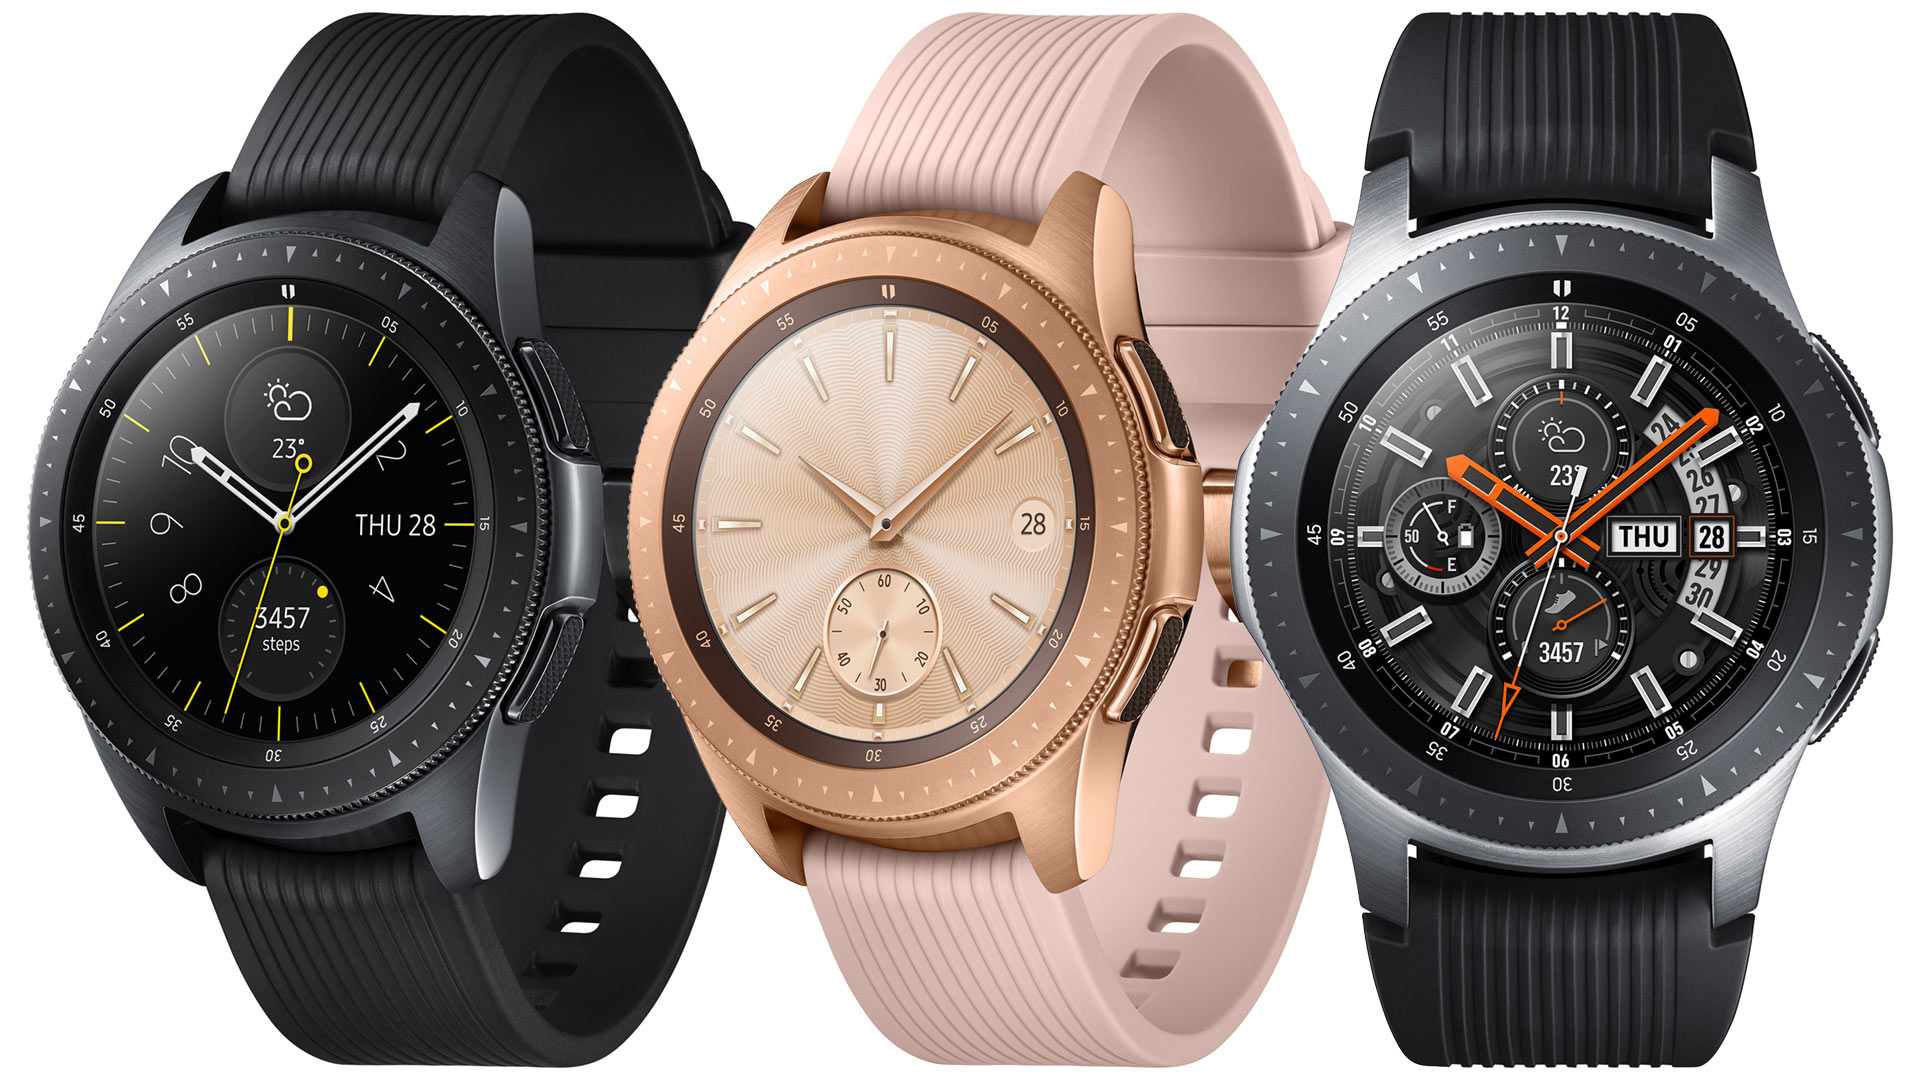 Samsung Galaxy Smartwatch For 2018 